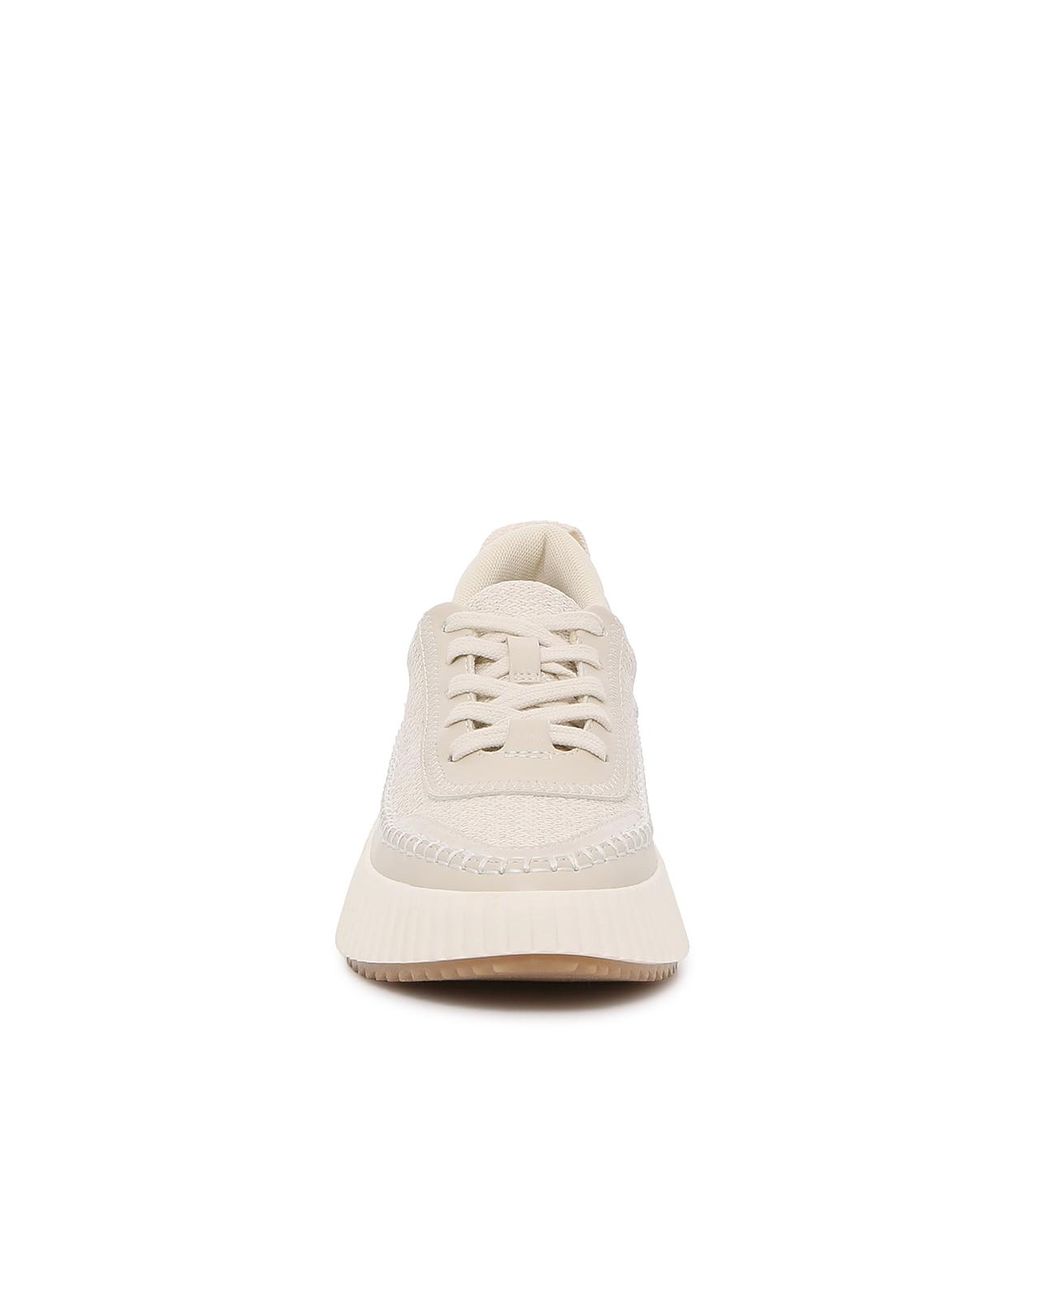 Dolce Vita Daran Wedge Sneaker in White | Lyst